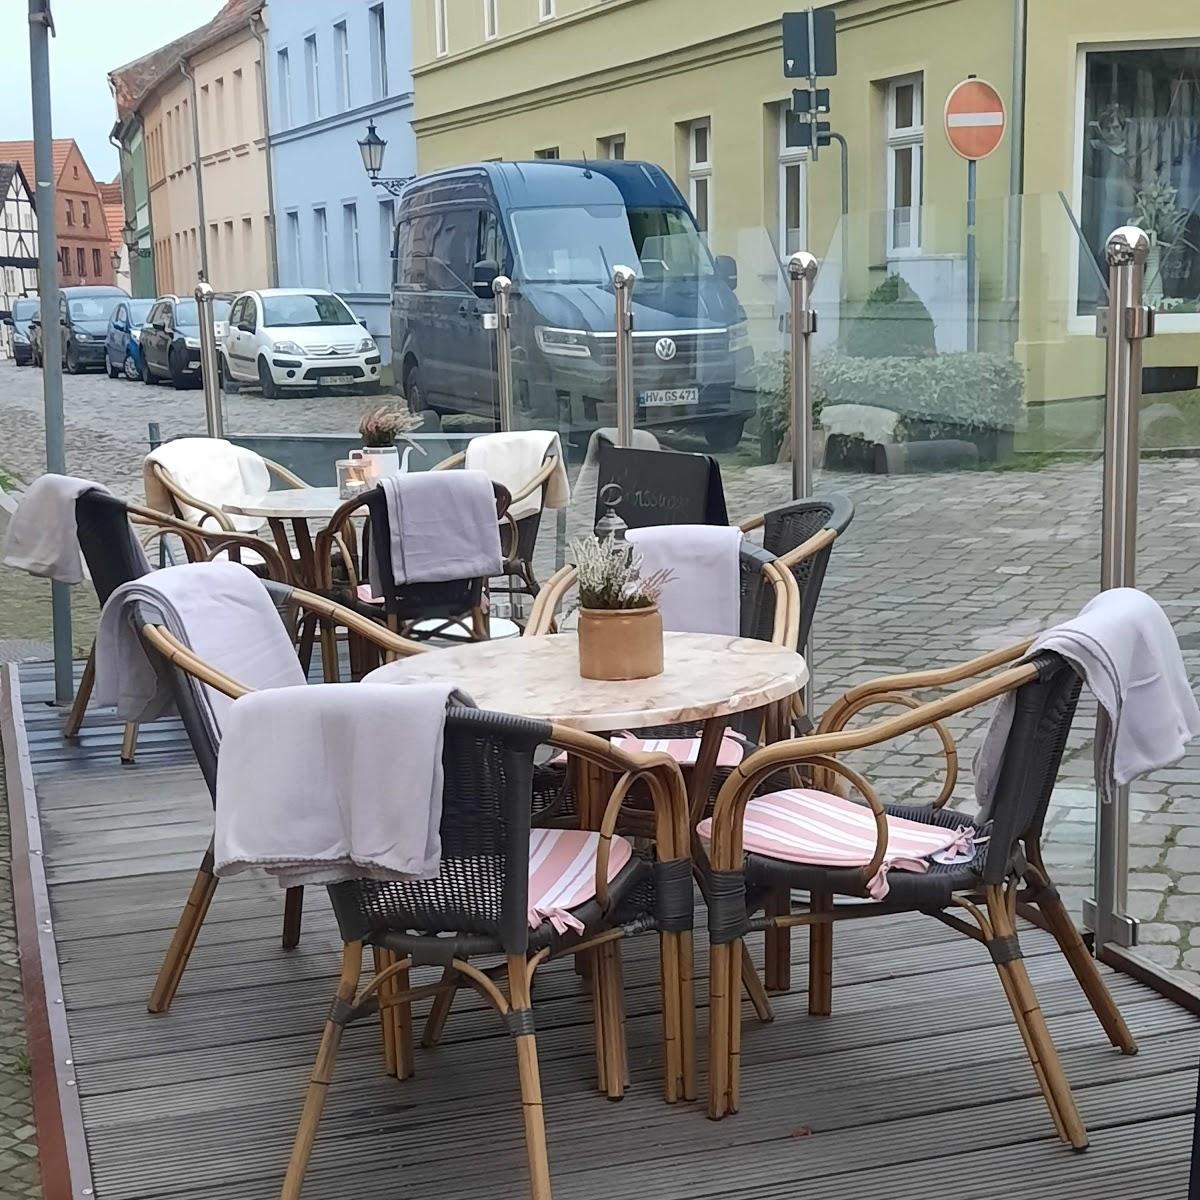 Restaurant "Café D8" in  Havelberg